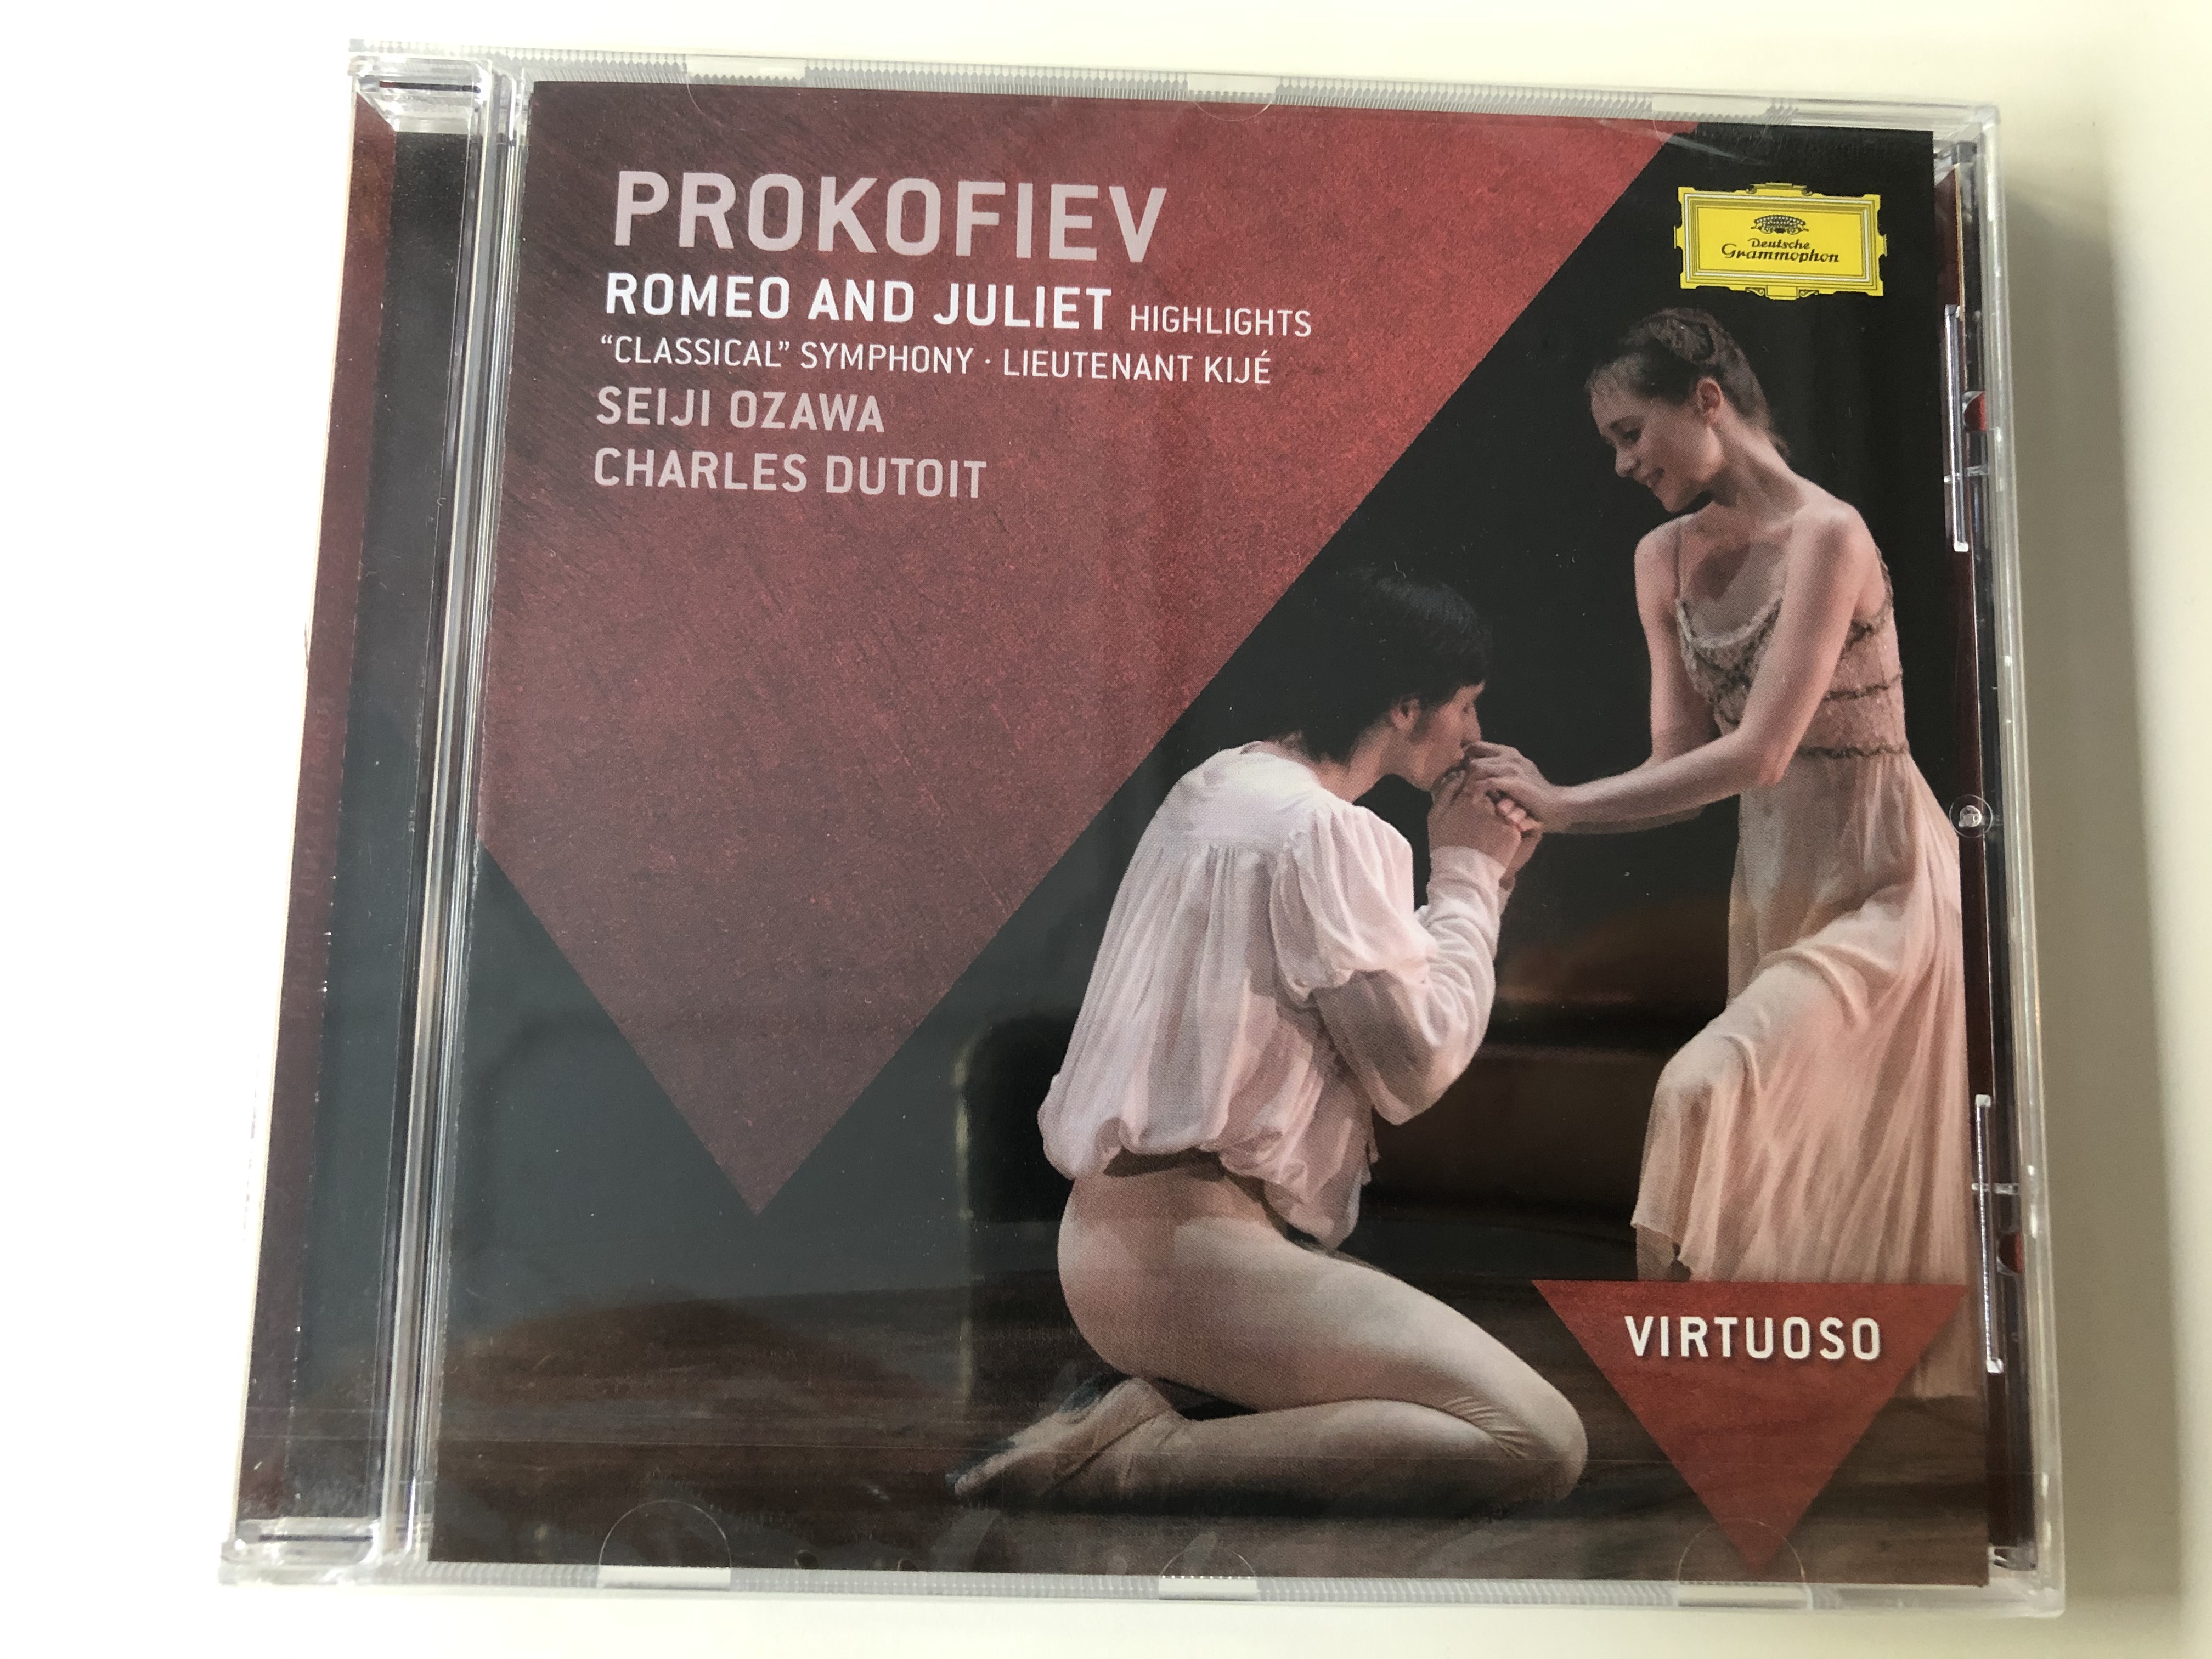 prokofiev-romeo-juliet-highlights-classical-symphony-lieutenant-kij-seiji-ozawa-charles-dutoit-deutsche-grammophon-audio-cd-2012-478-4237-1-.jpg